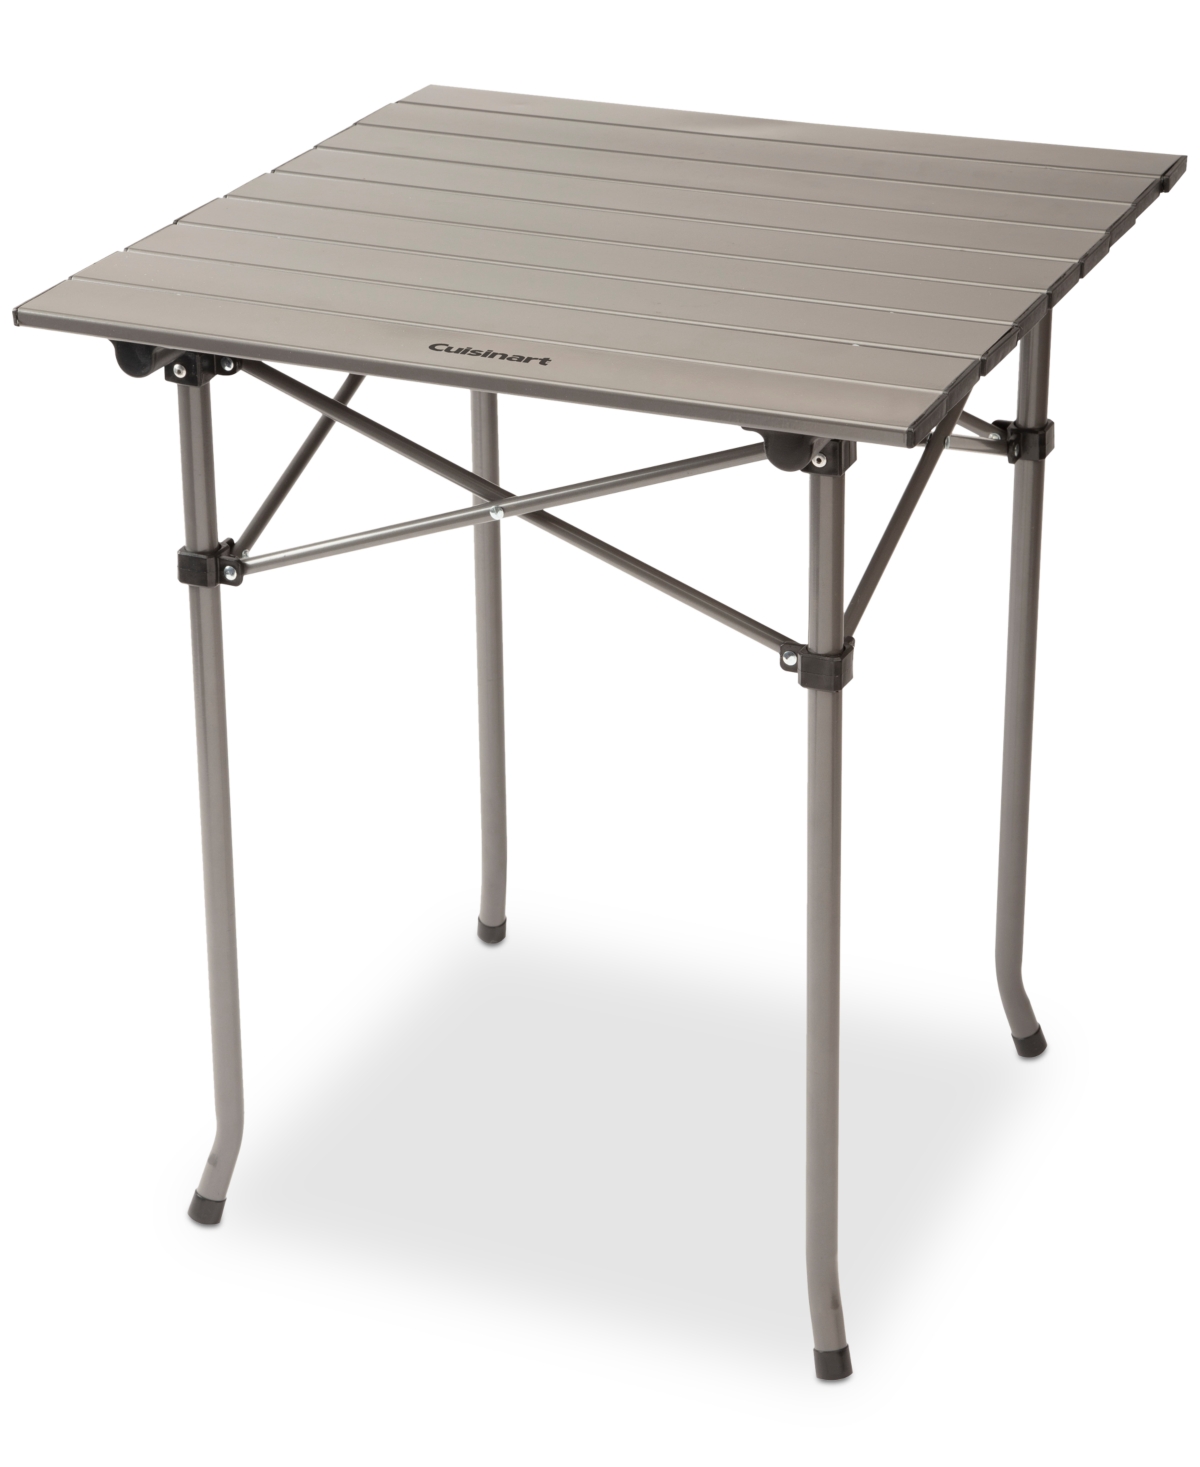 Cuisinart Aluminum Folding Table In Stainless